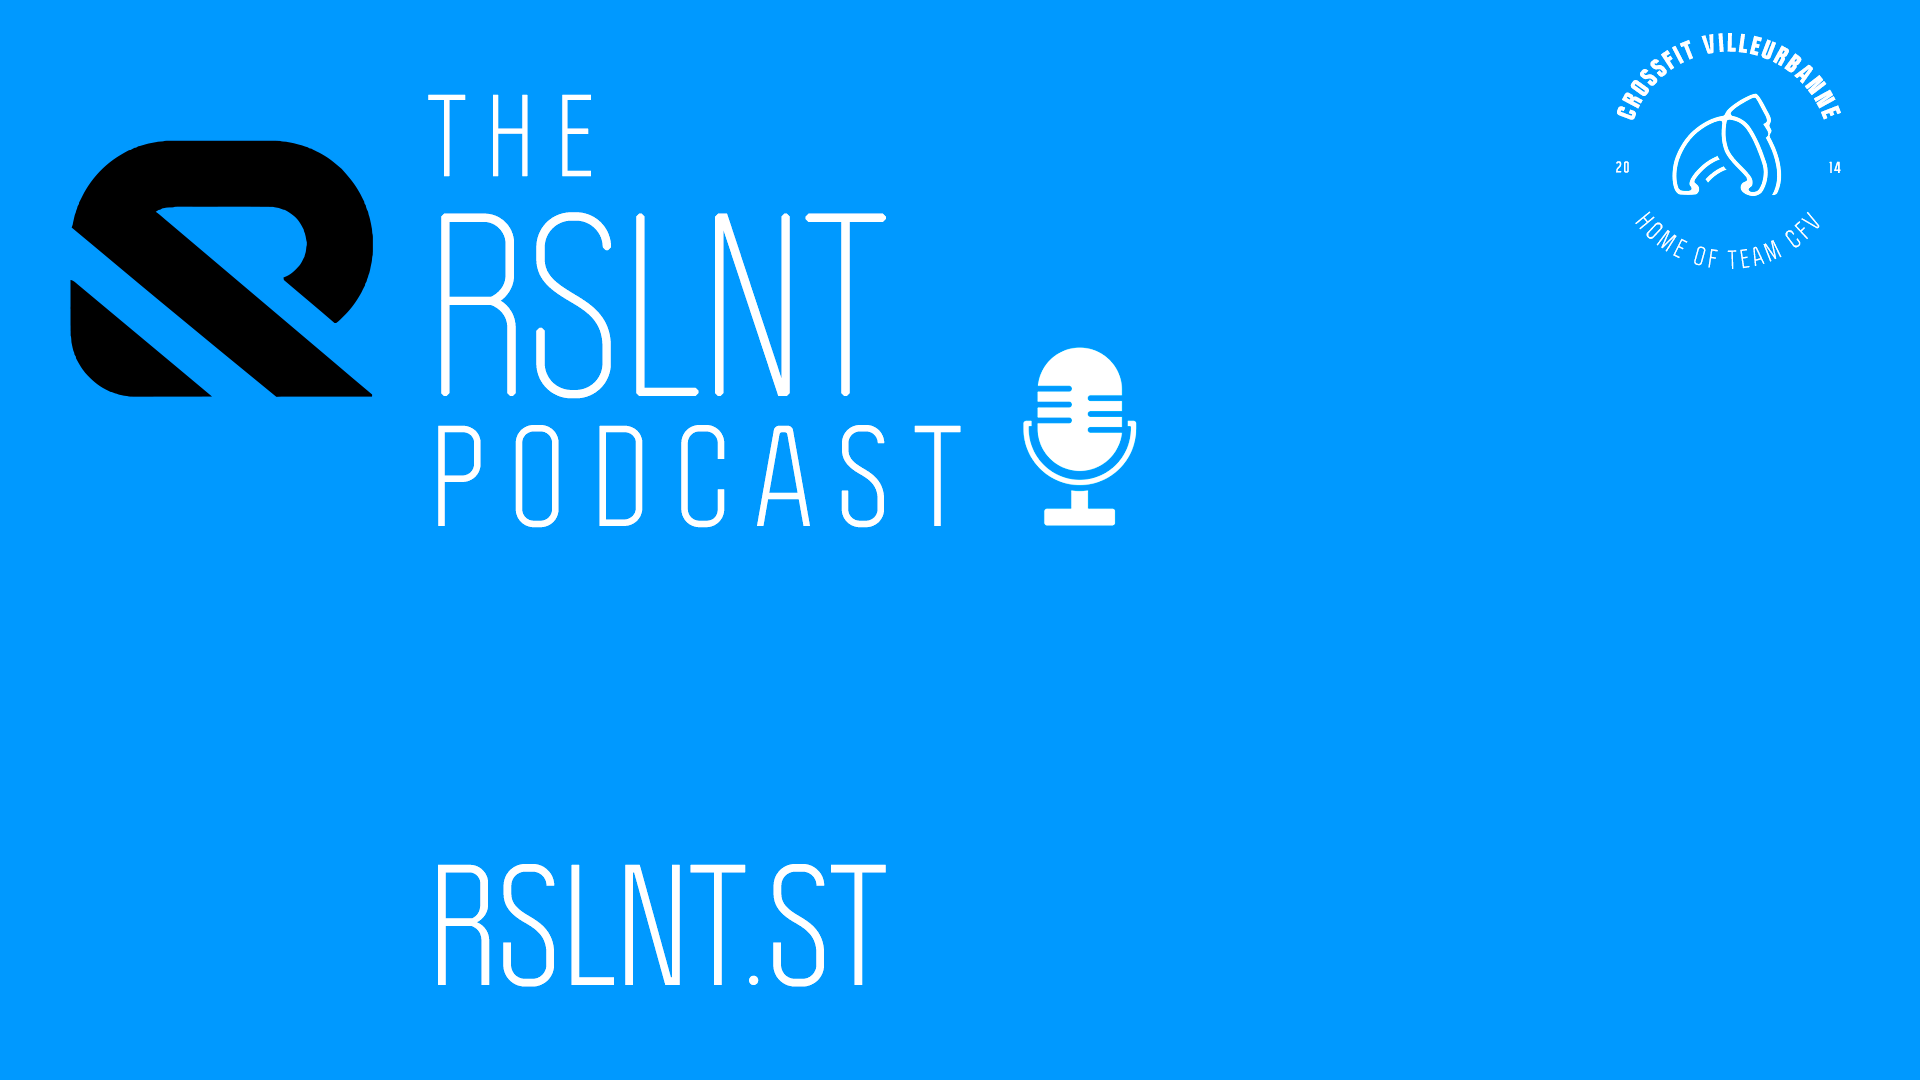 # Podcast à 100% CrossFit avec John